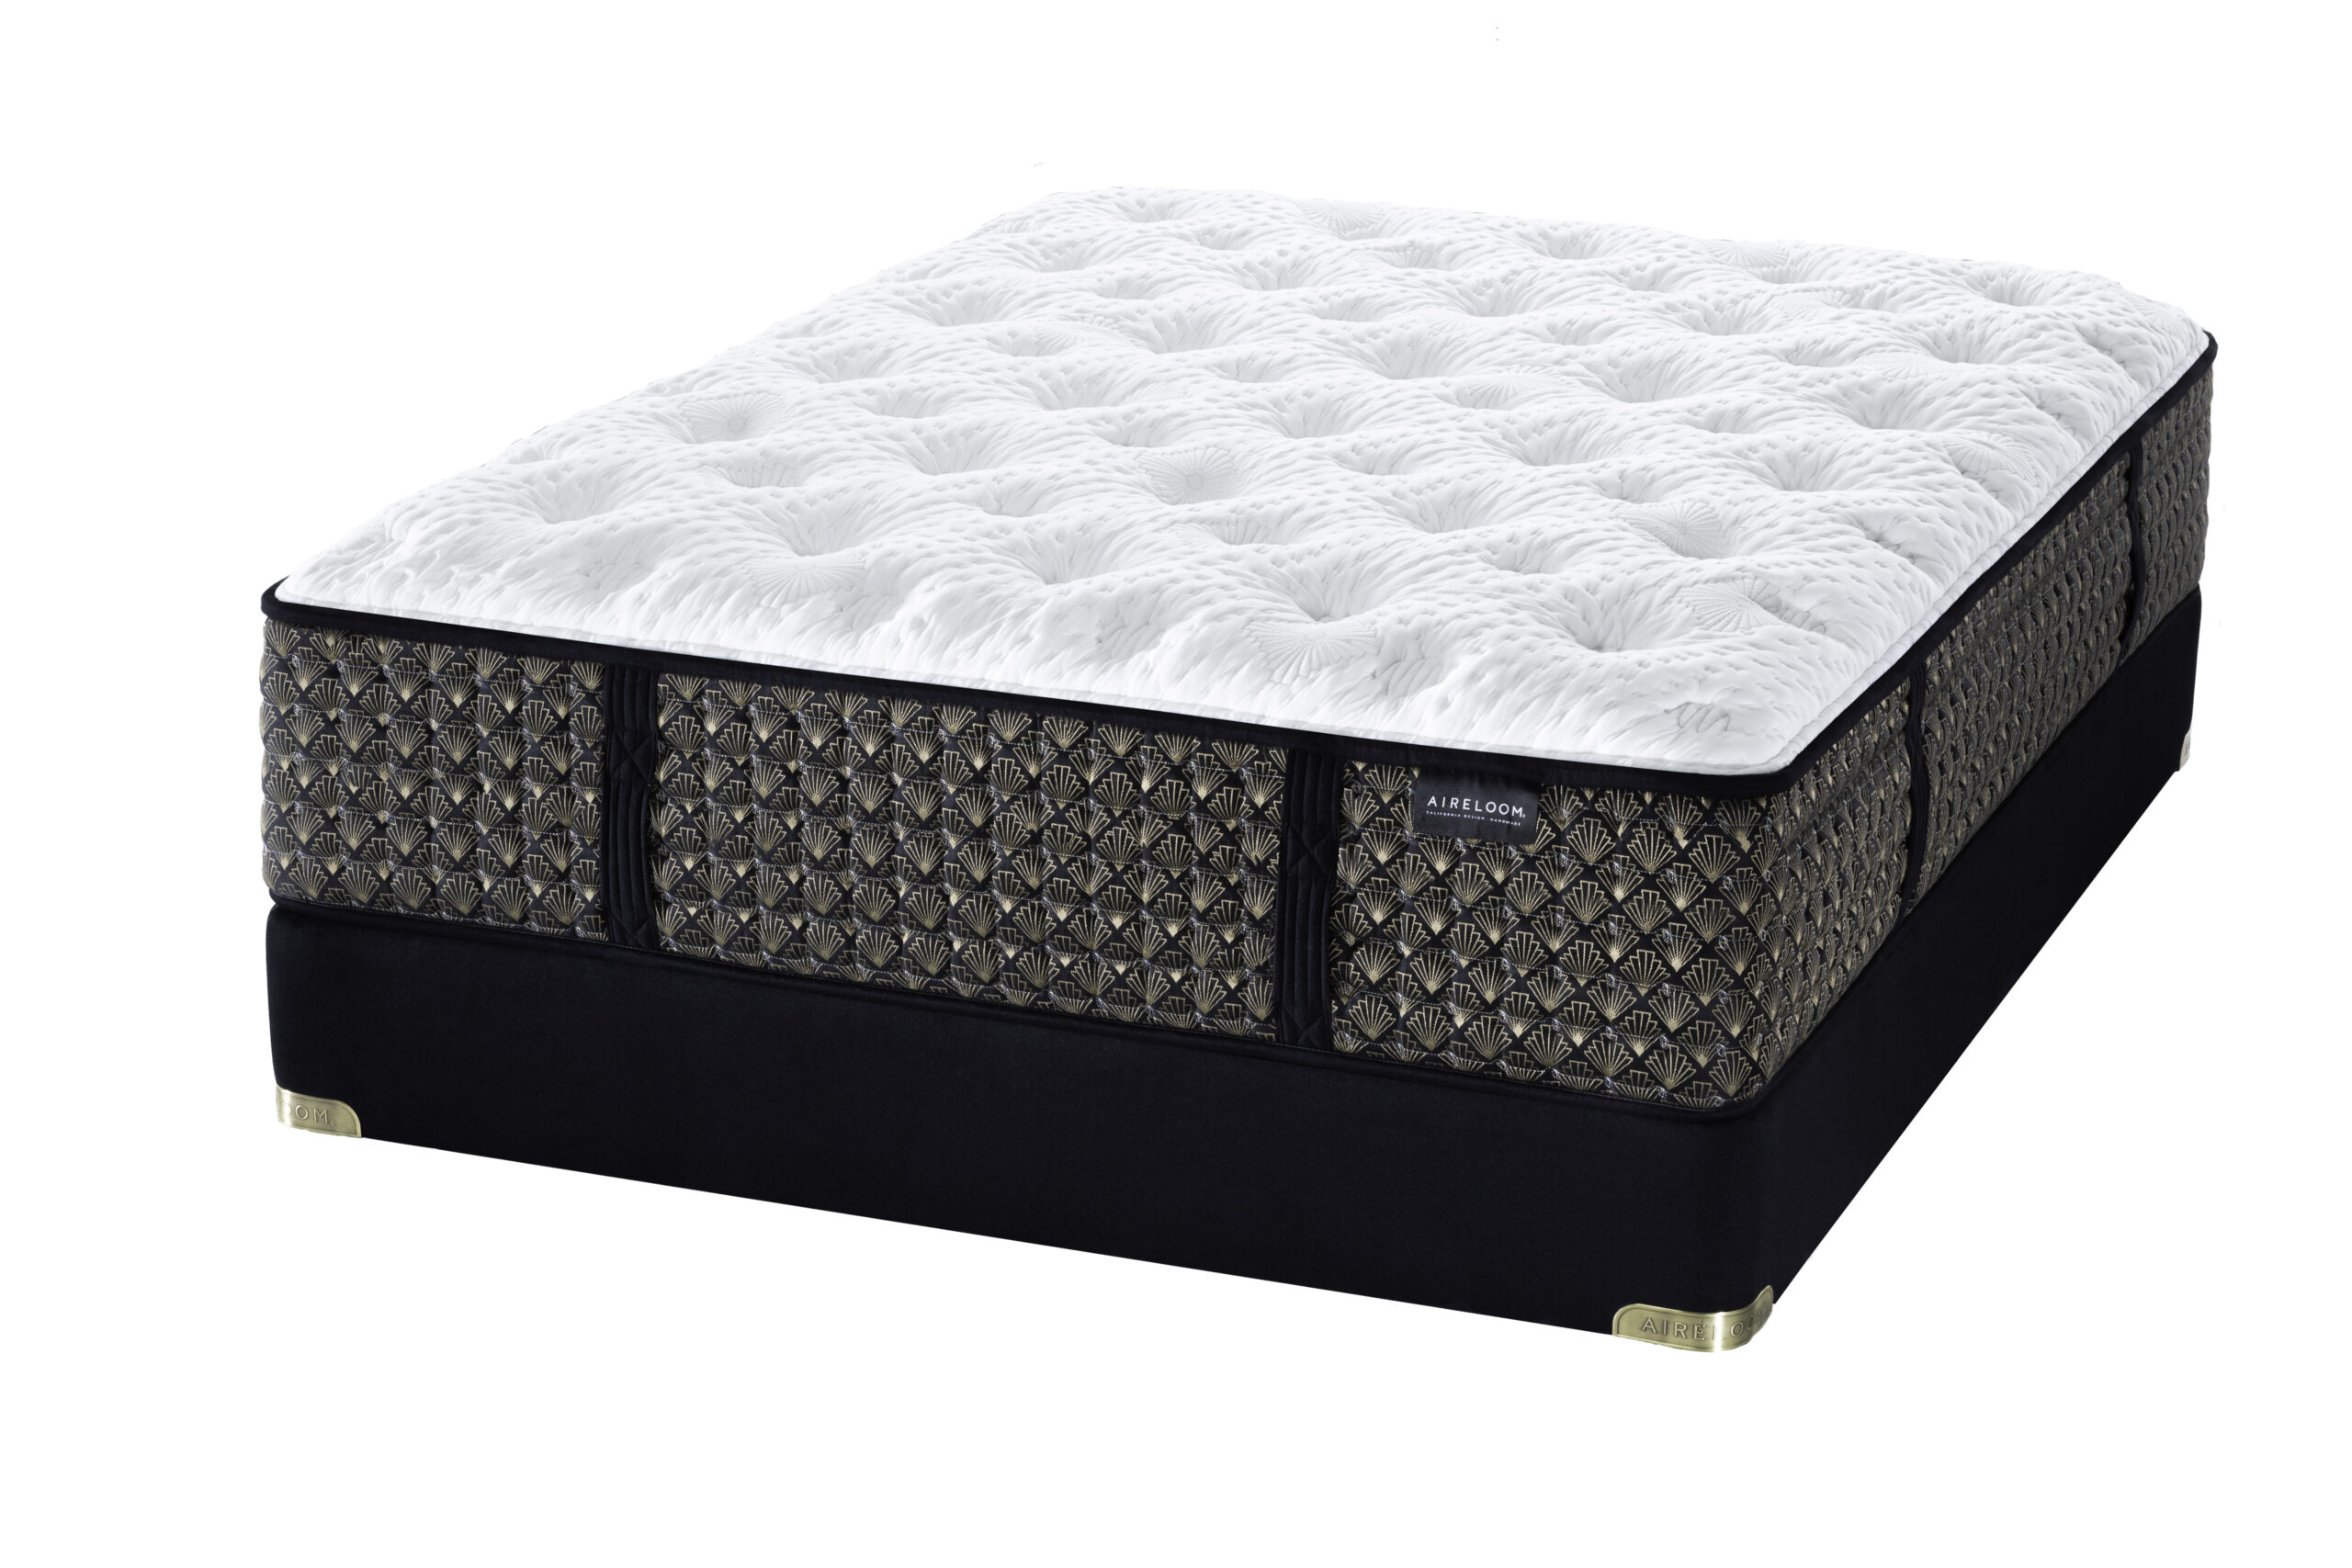 newport 12 luxury plush mattress reviews